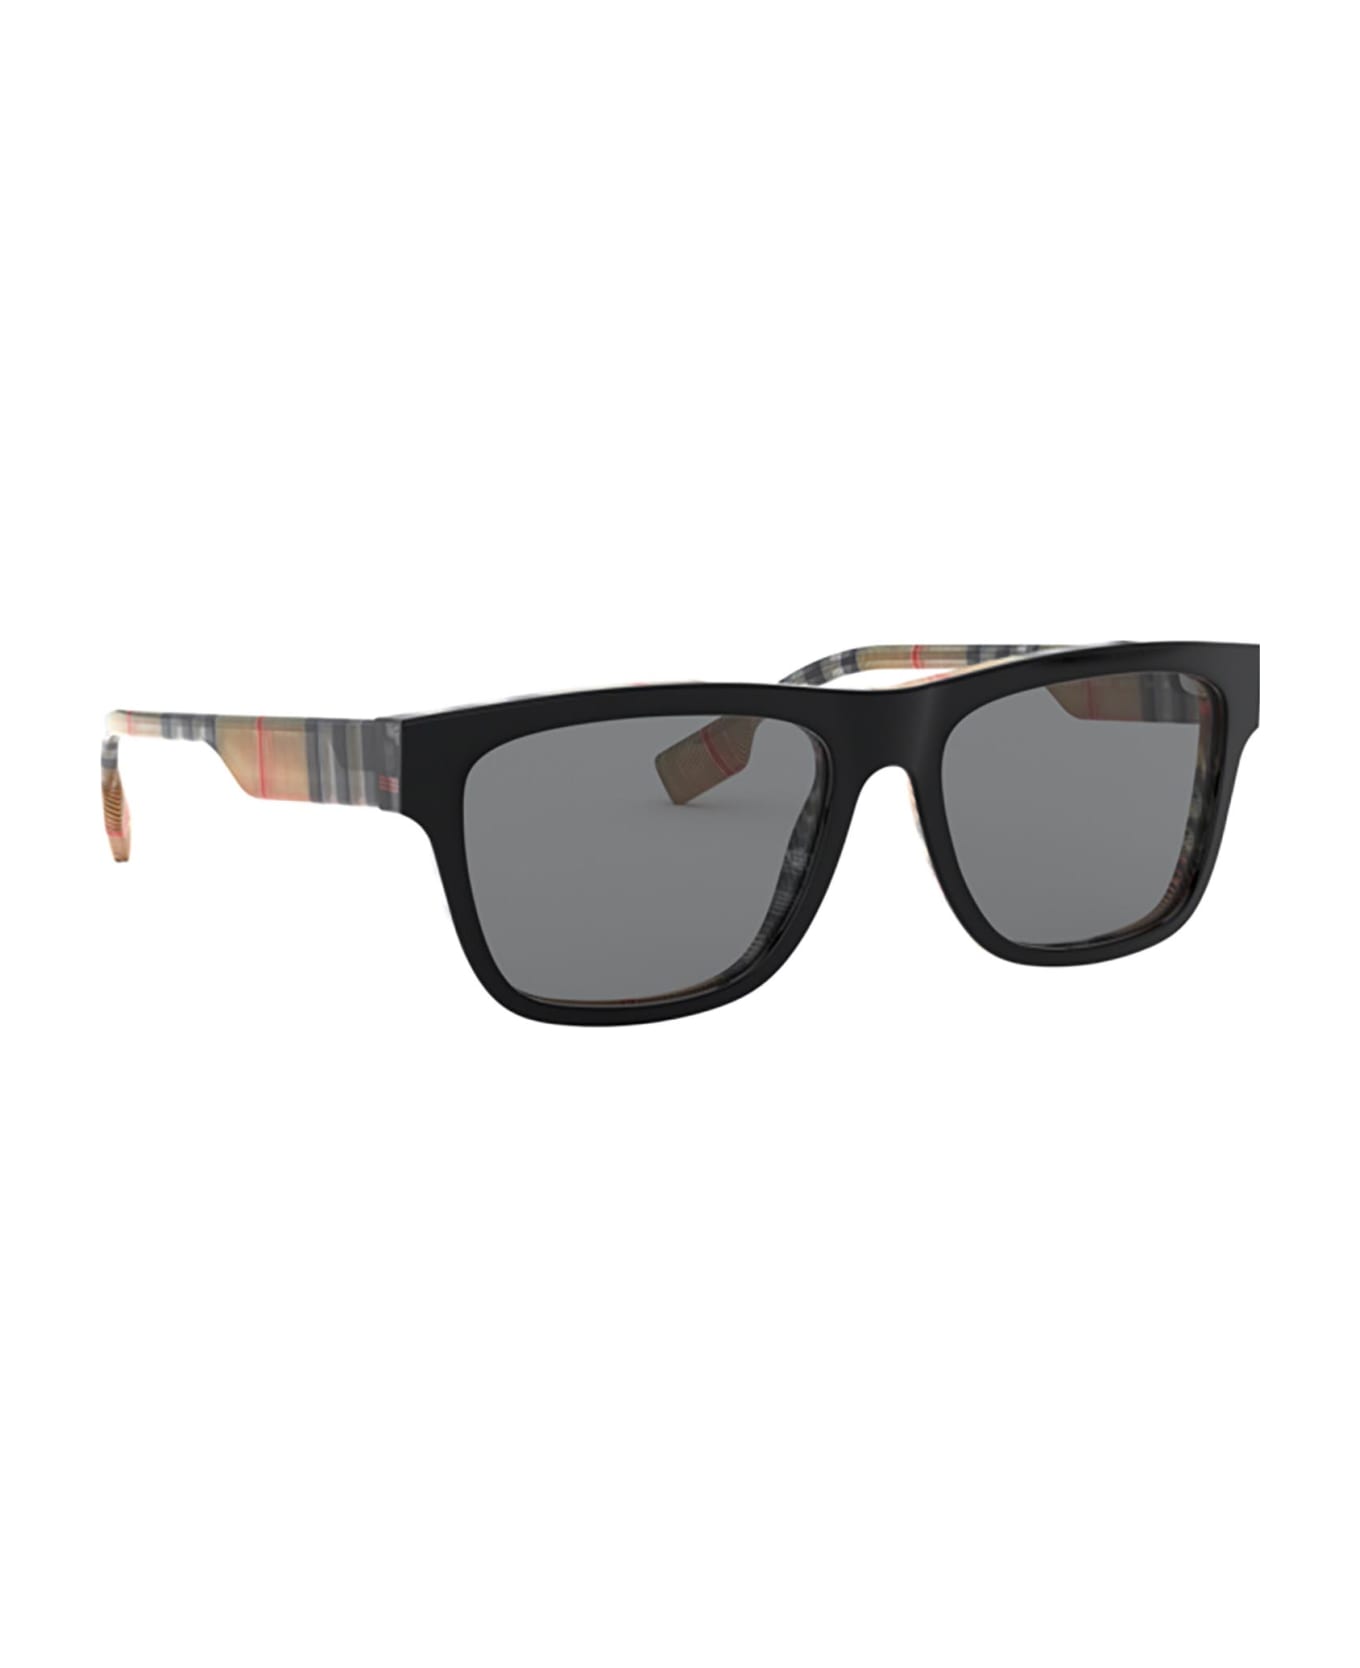 Burberry Eyewear Be4293 Top Black On Vintage Check Sunglasses - Top Black on Vintage Check サングラス